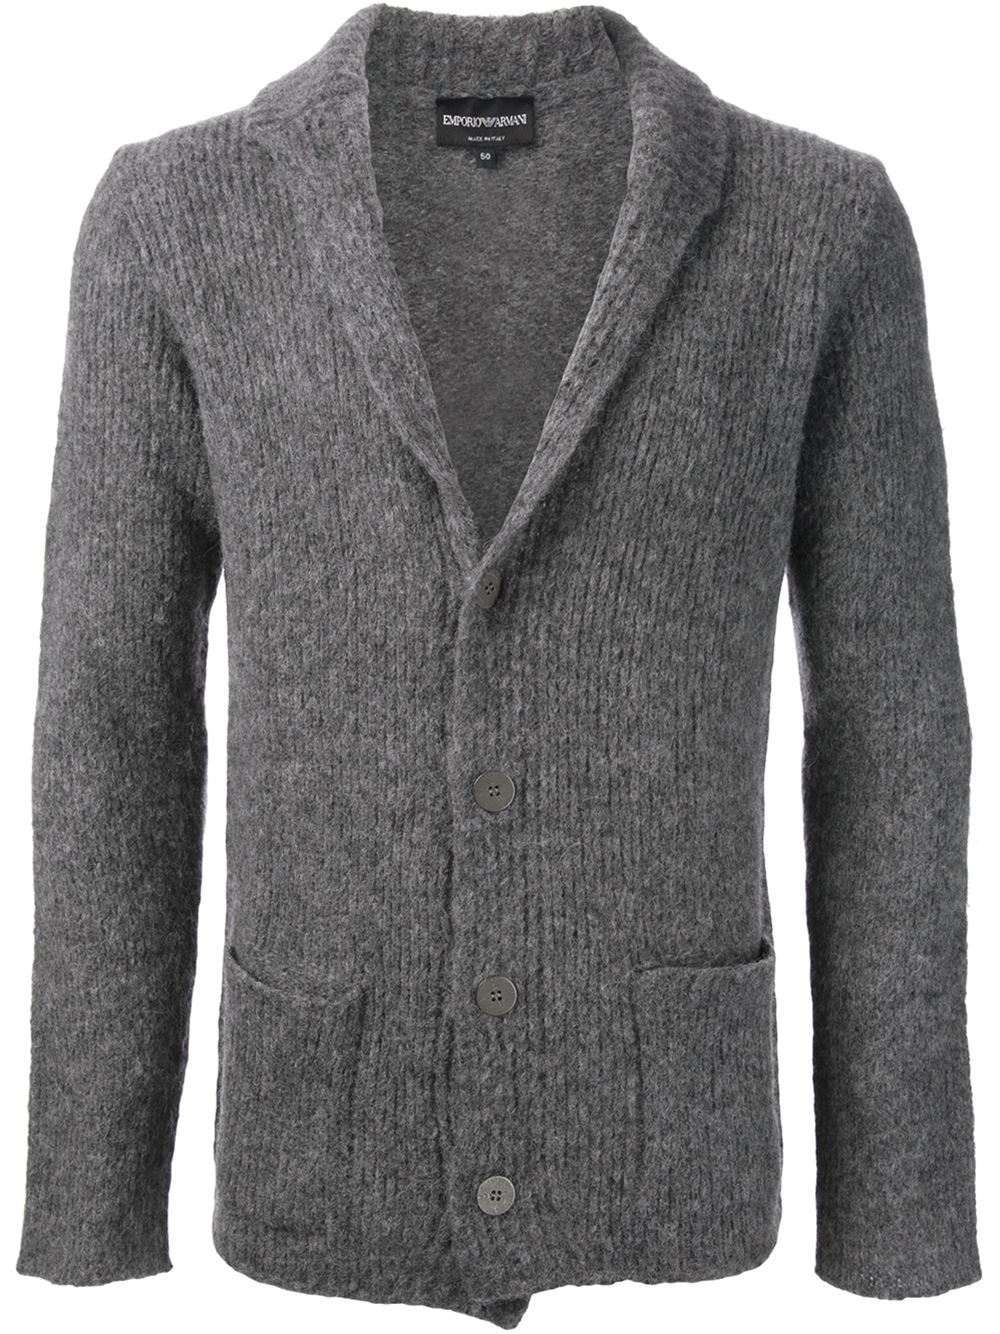 Emporio Armani Shawl Collar Cardigan in Grey (Gray) for Men - Lyst